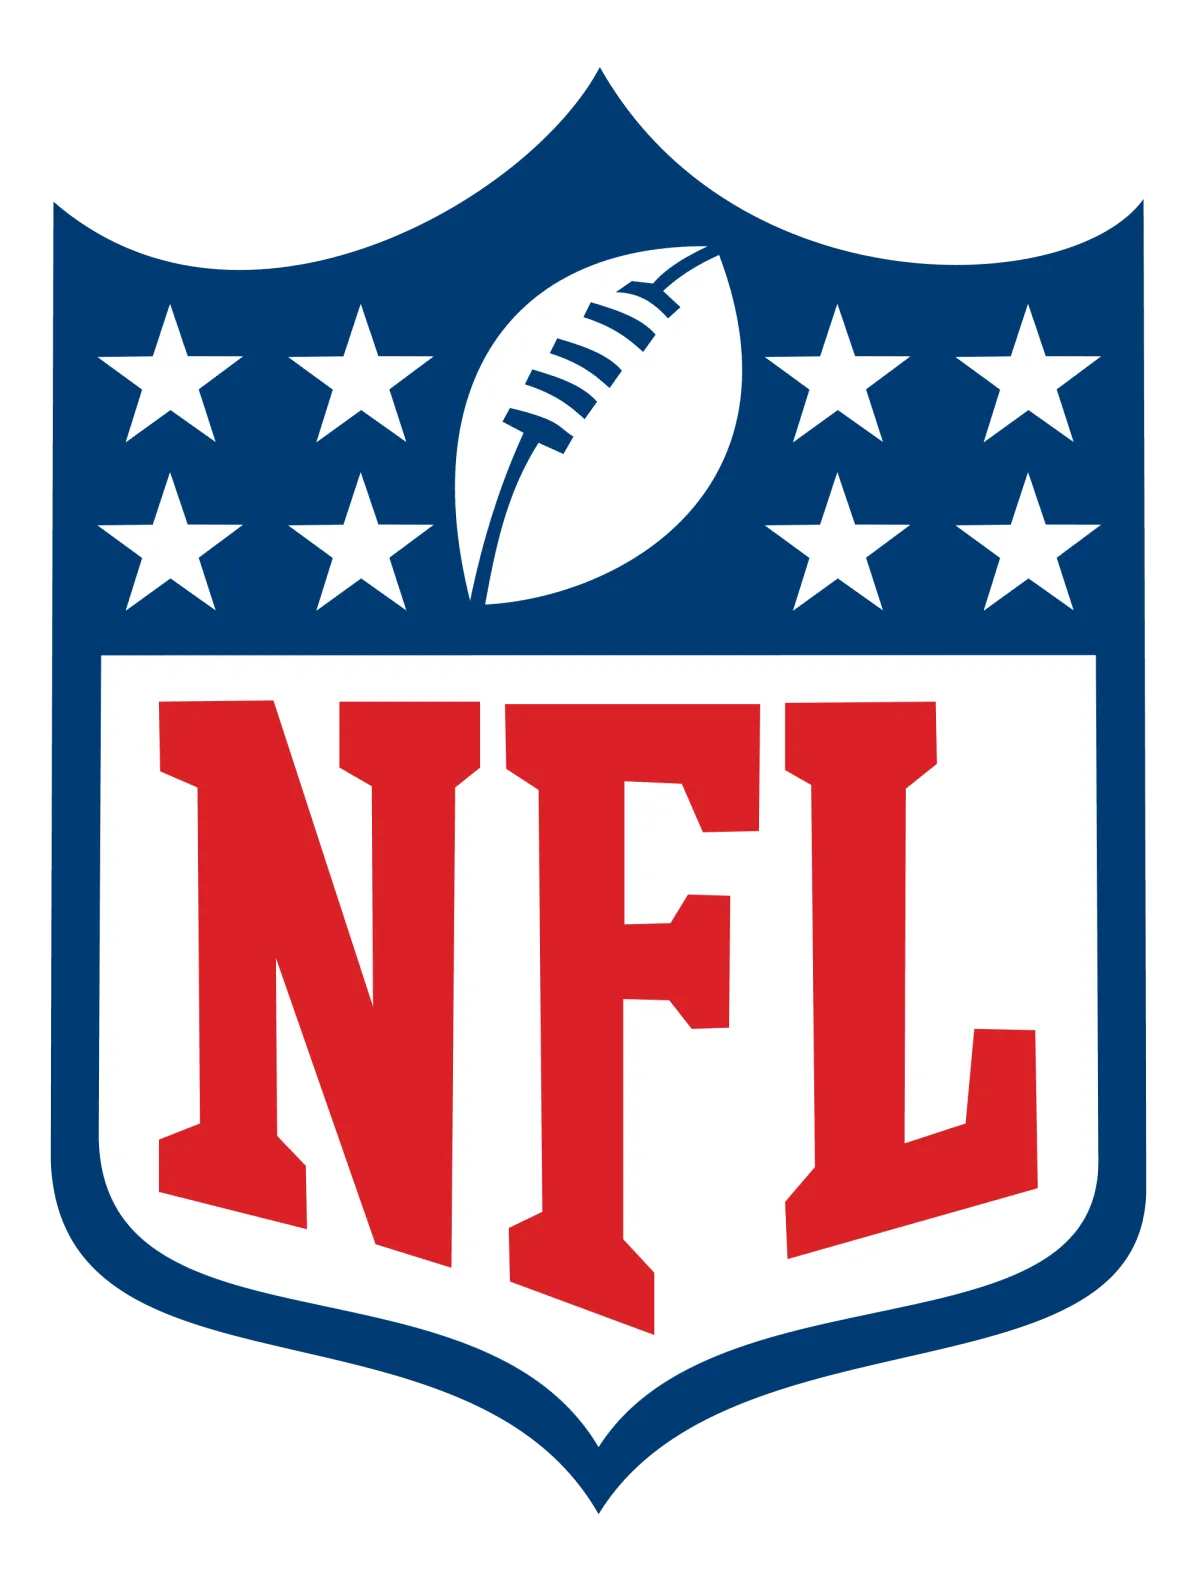 National Football League, NFL